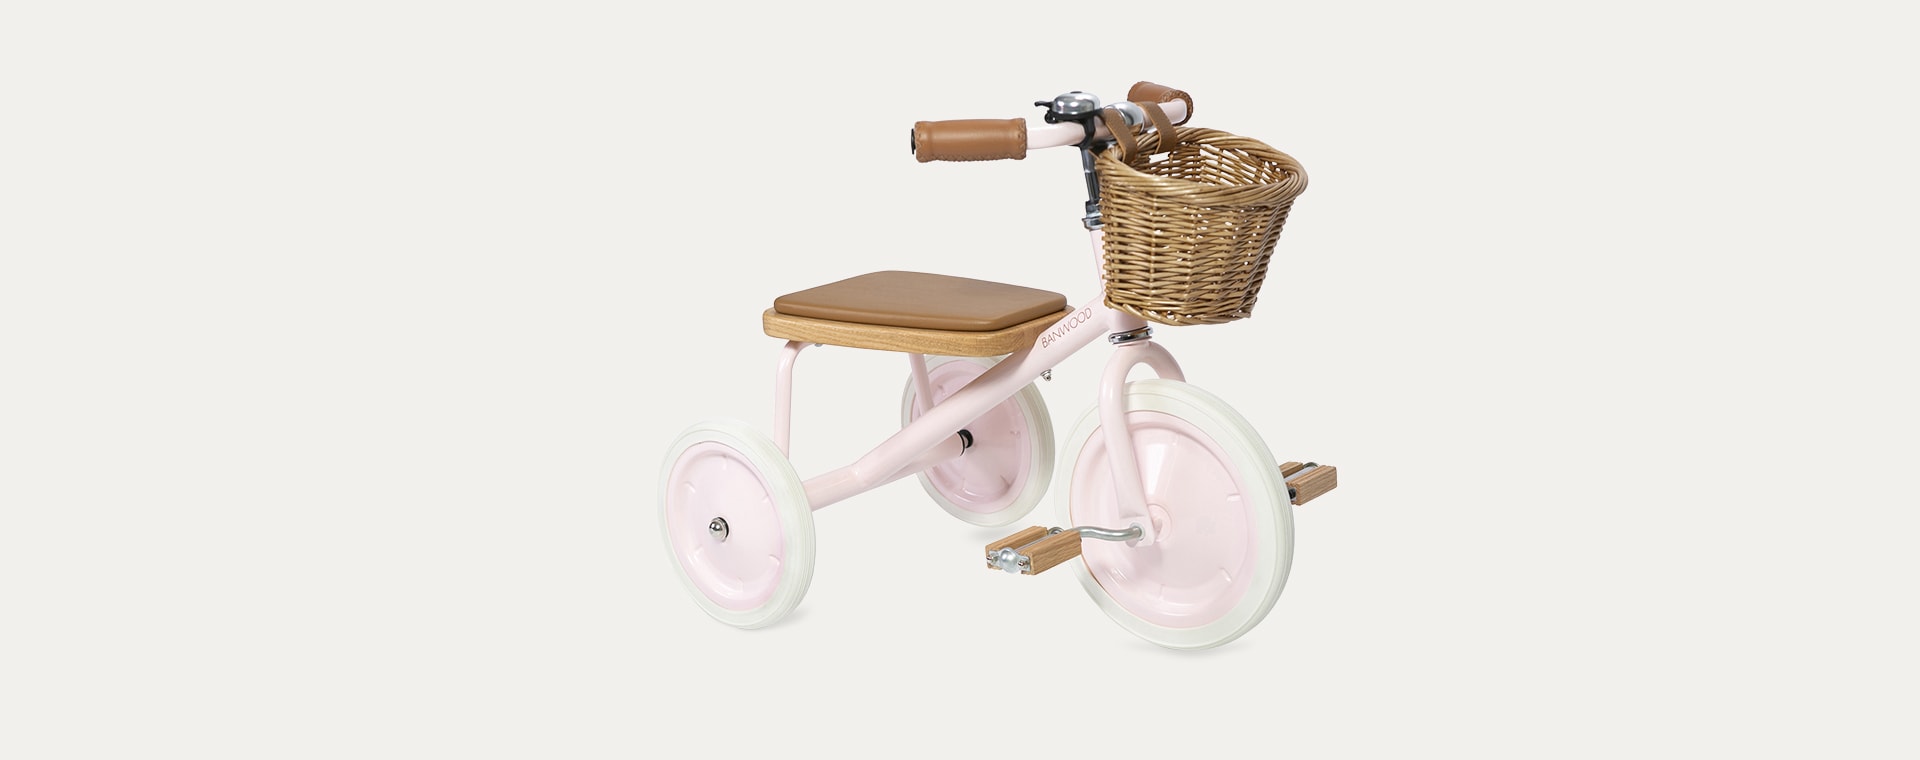 Light Pink Banwood Trike